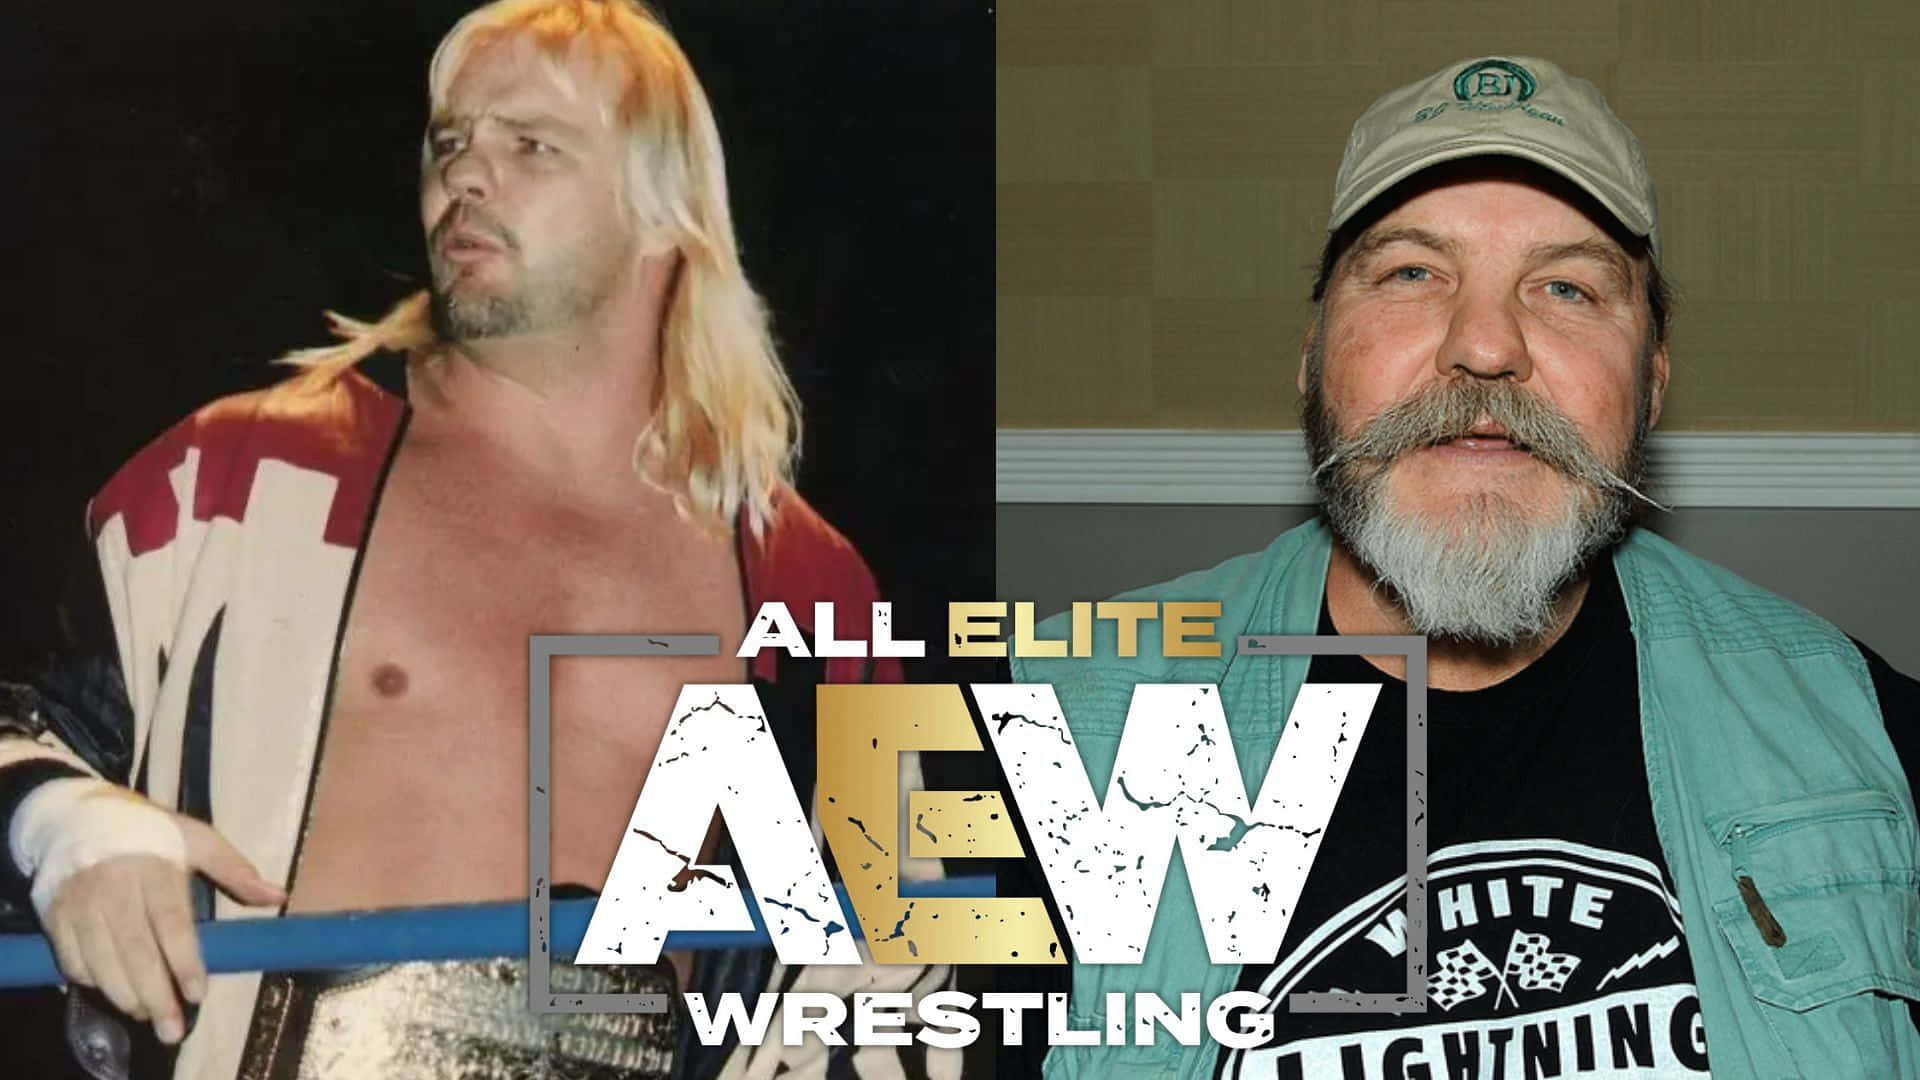 Allelite Wrestling Barry Windham - All Elite Wrestling Barry Windham Wallpaper